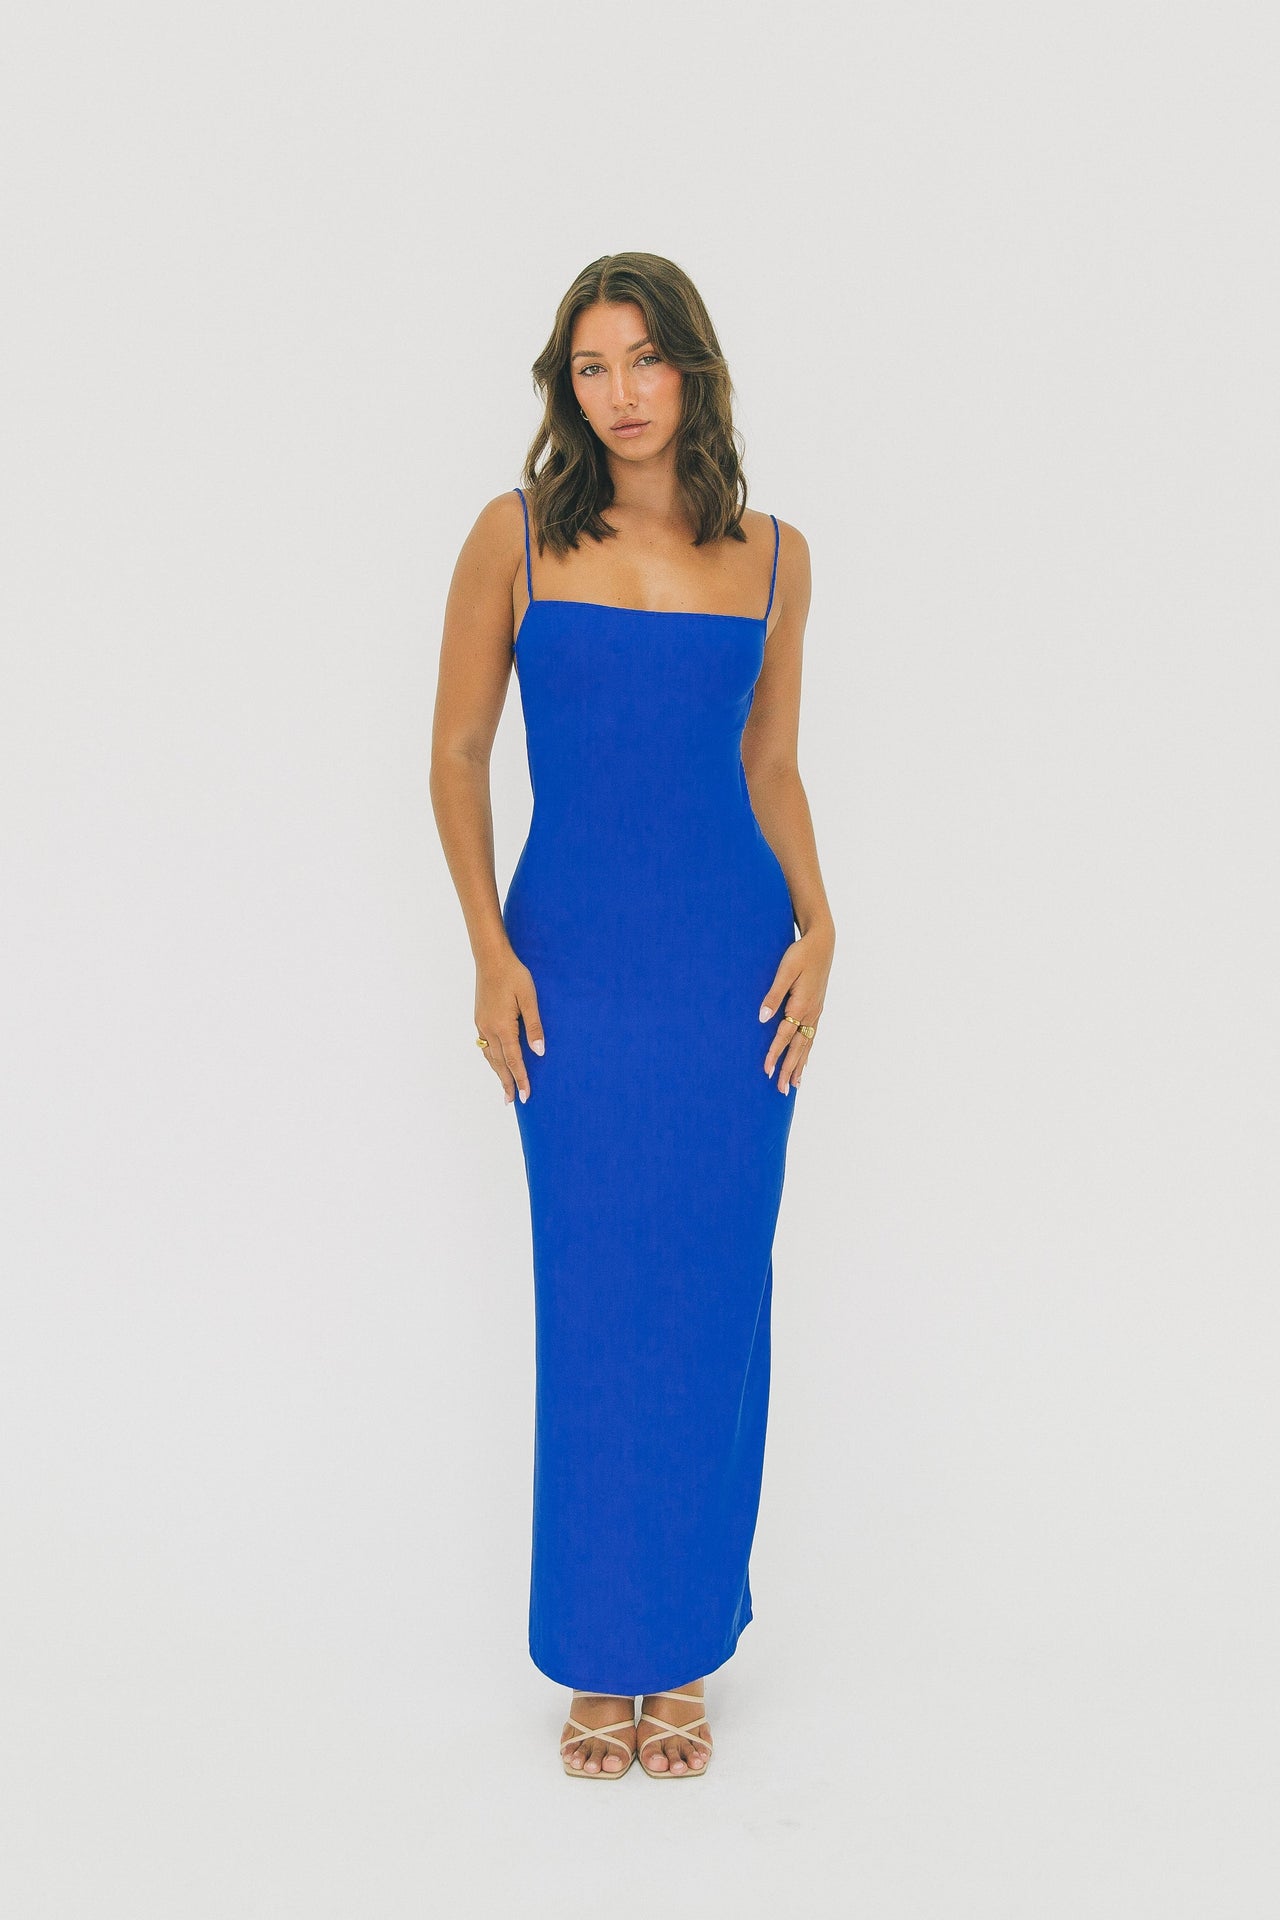 Amaia The Label Tanaya Dress Blue